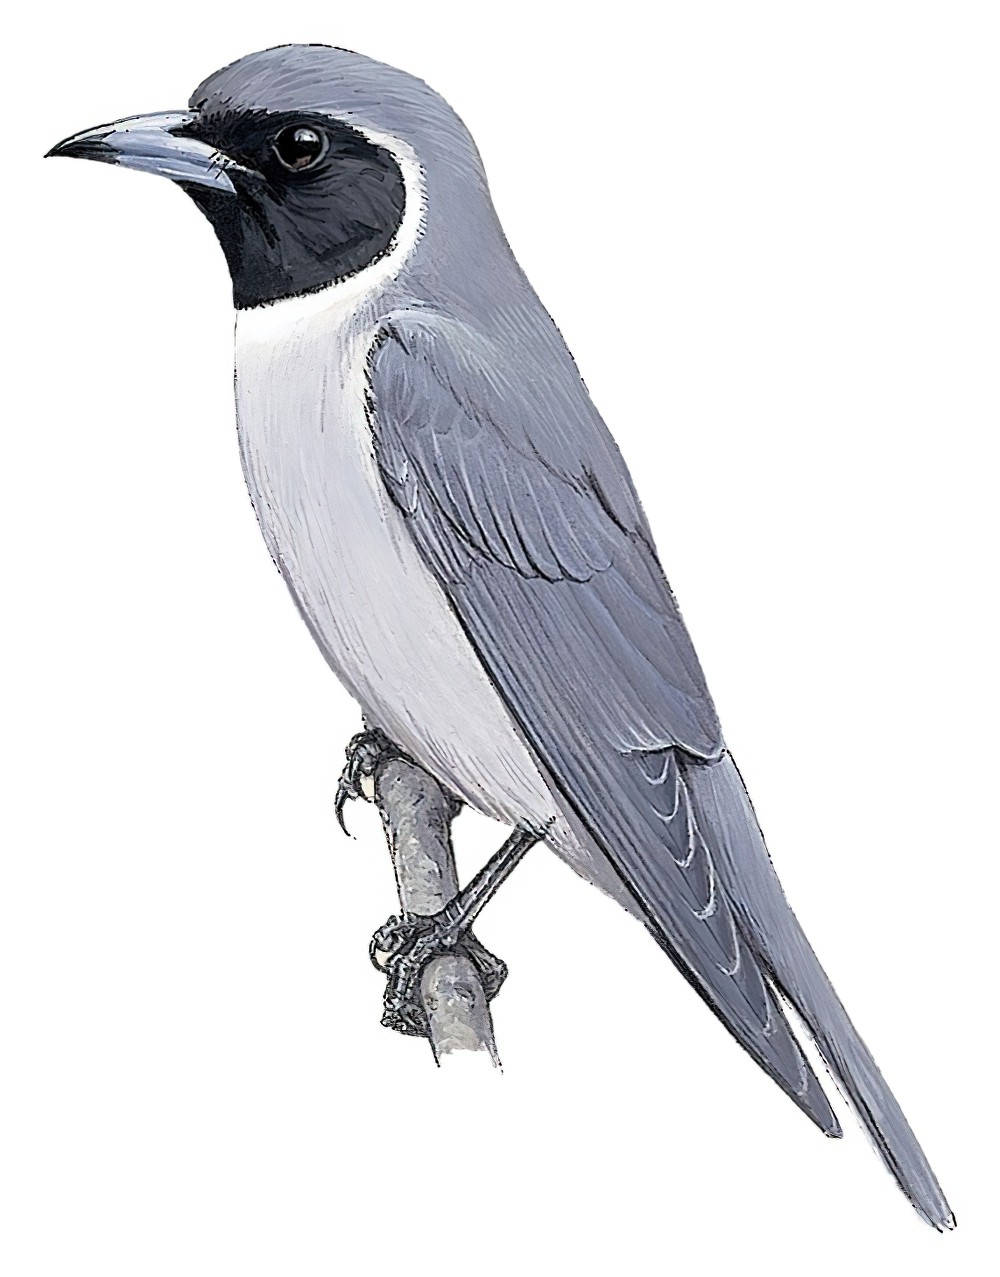 Masked Woodswallow / Artamus personatus